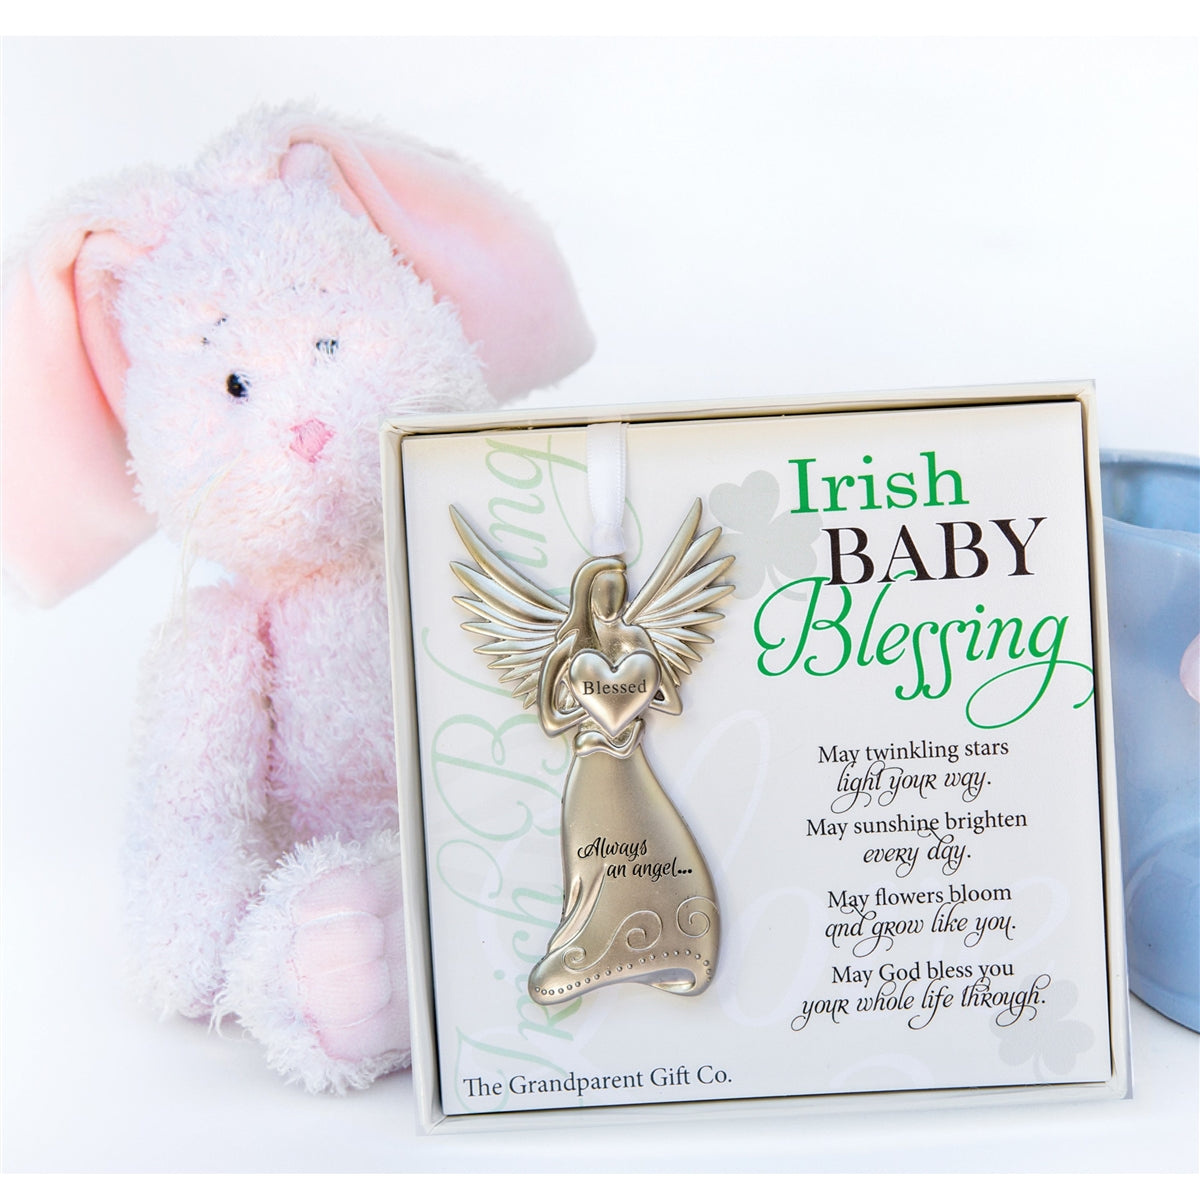 Irish Baby Blessing angel and sentiment.